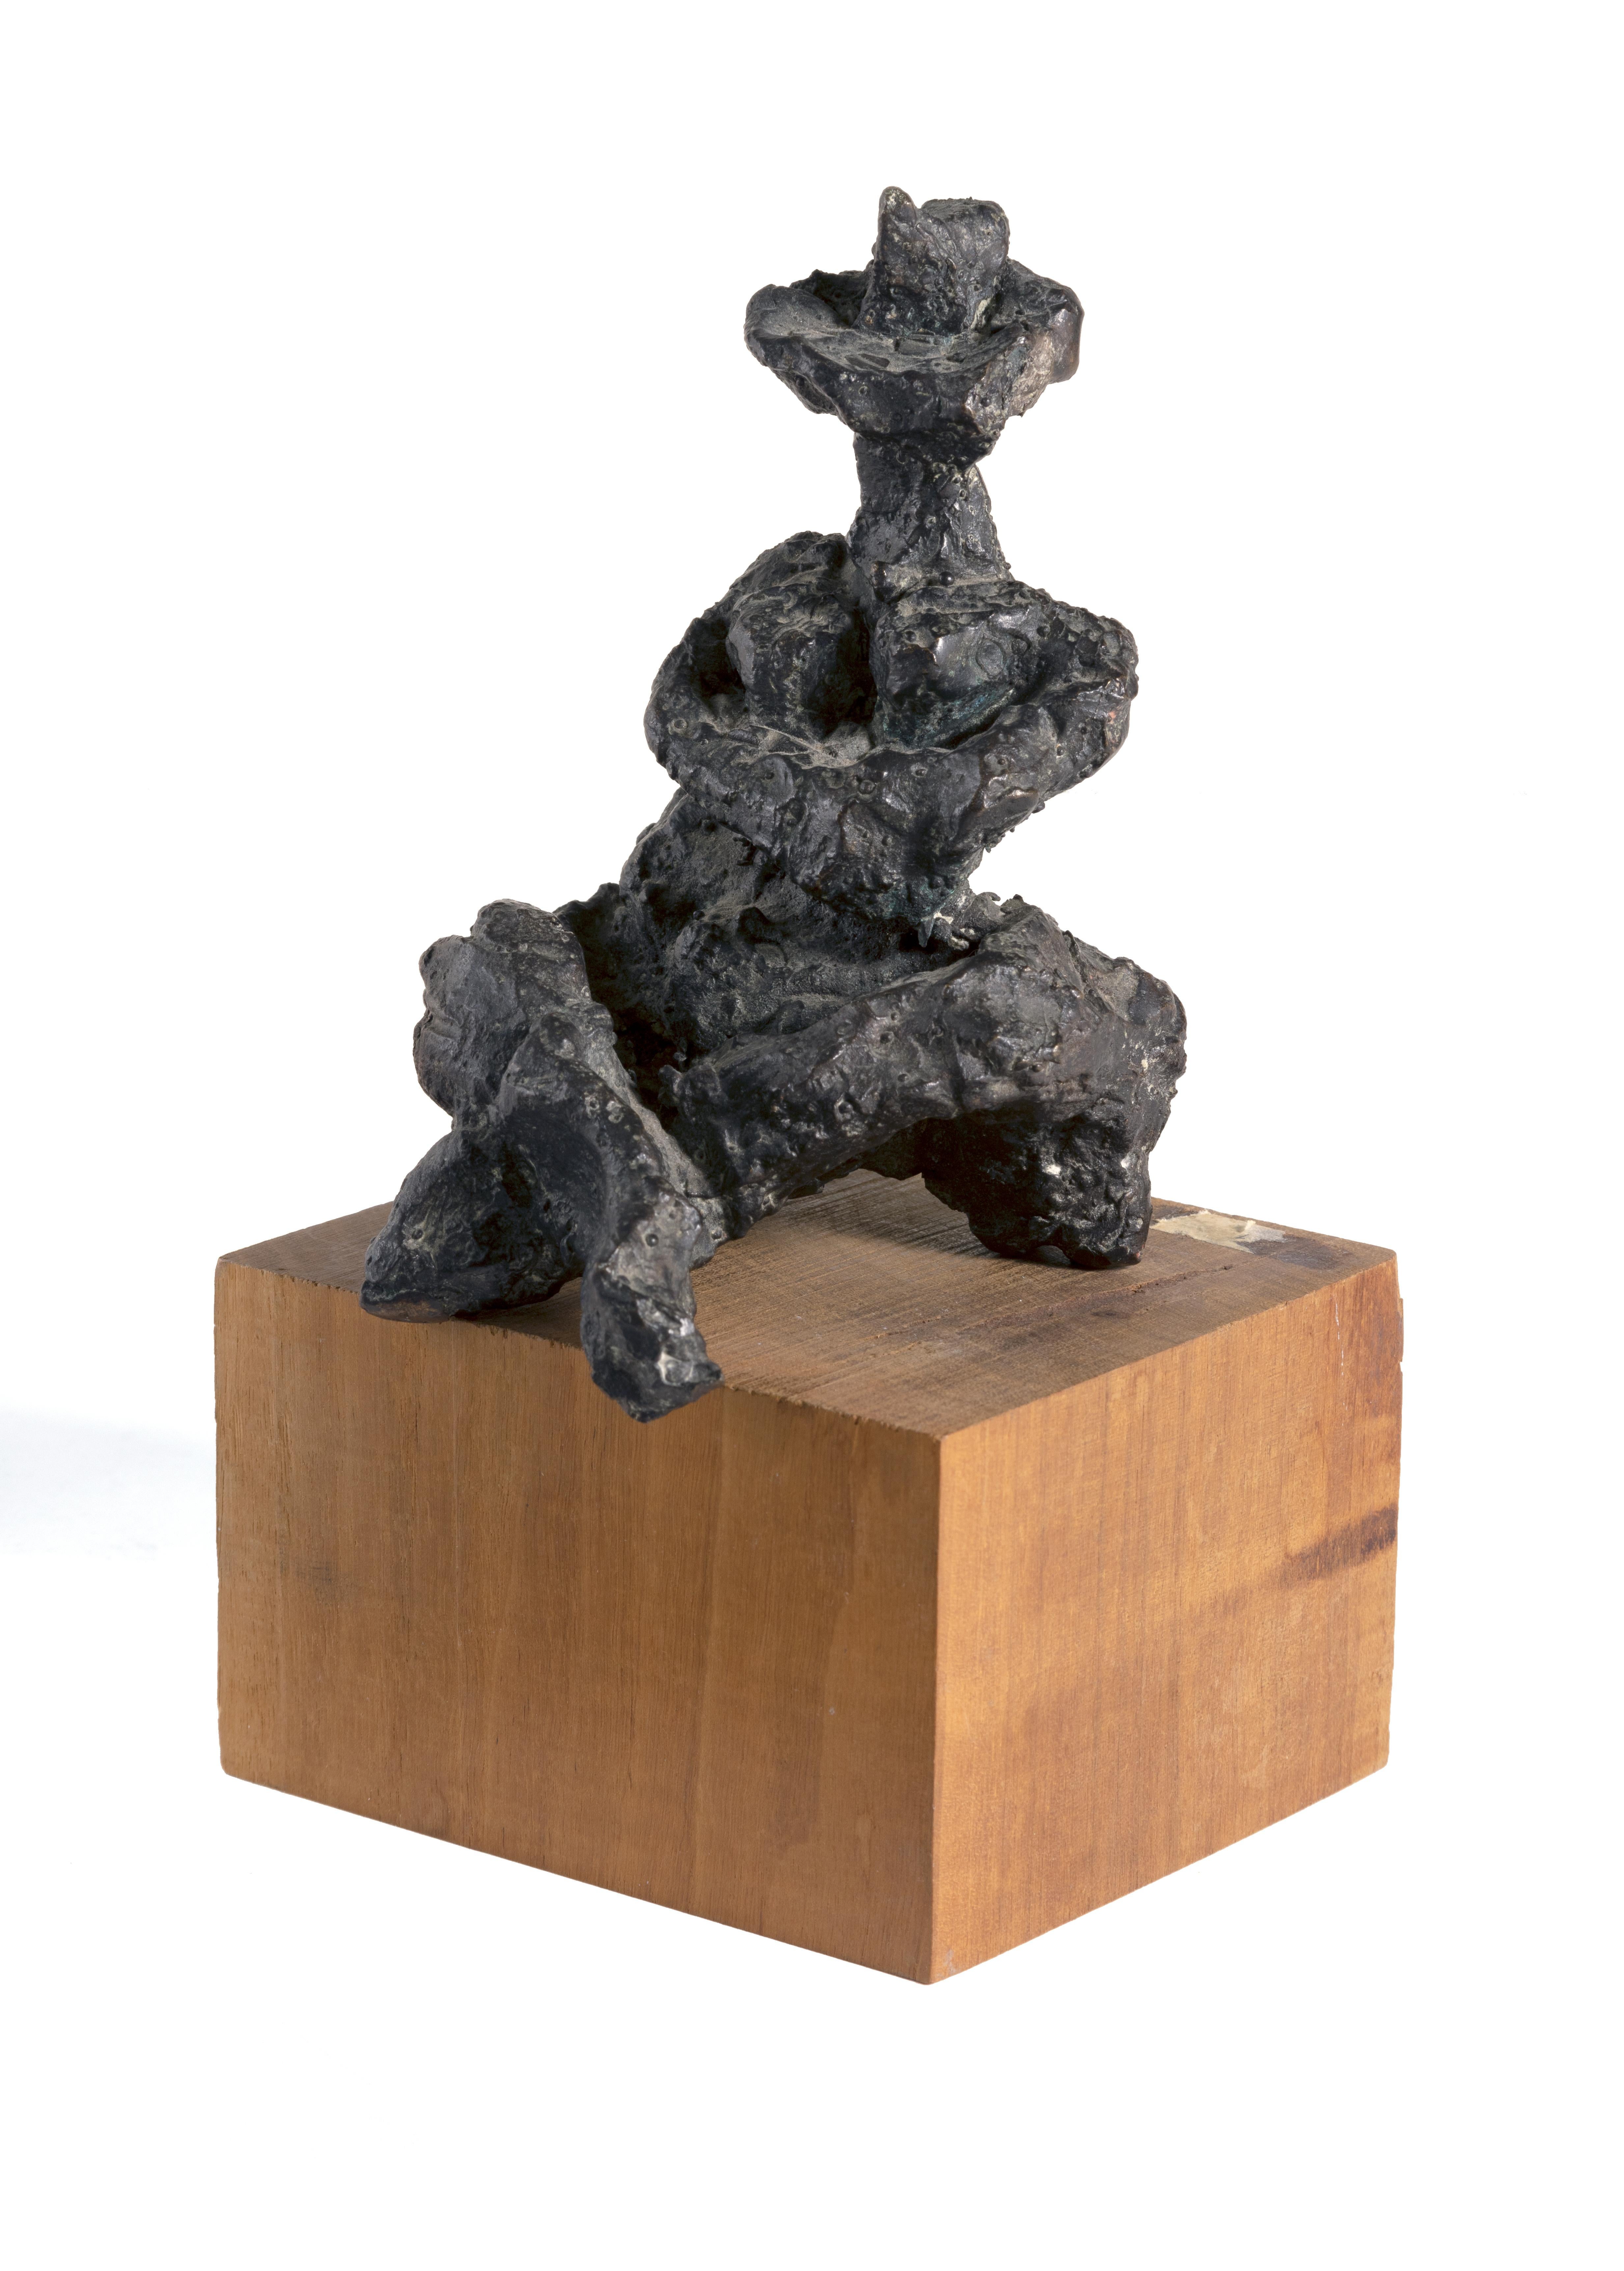 Seated Woman with Criss-Cross Legs - Sculpture by Reuben Kadish